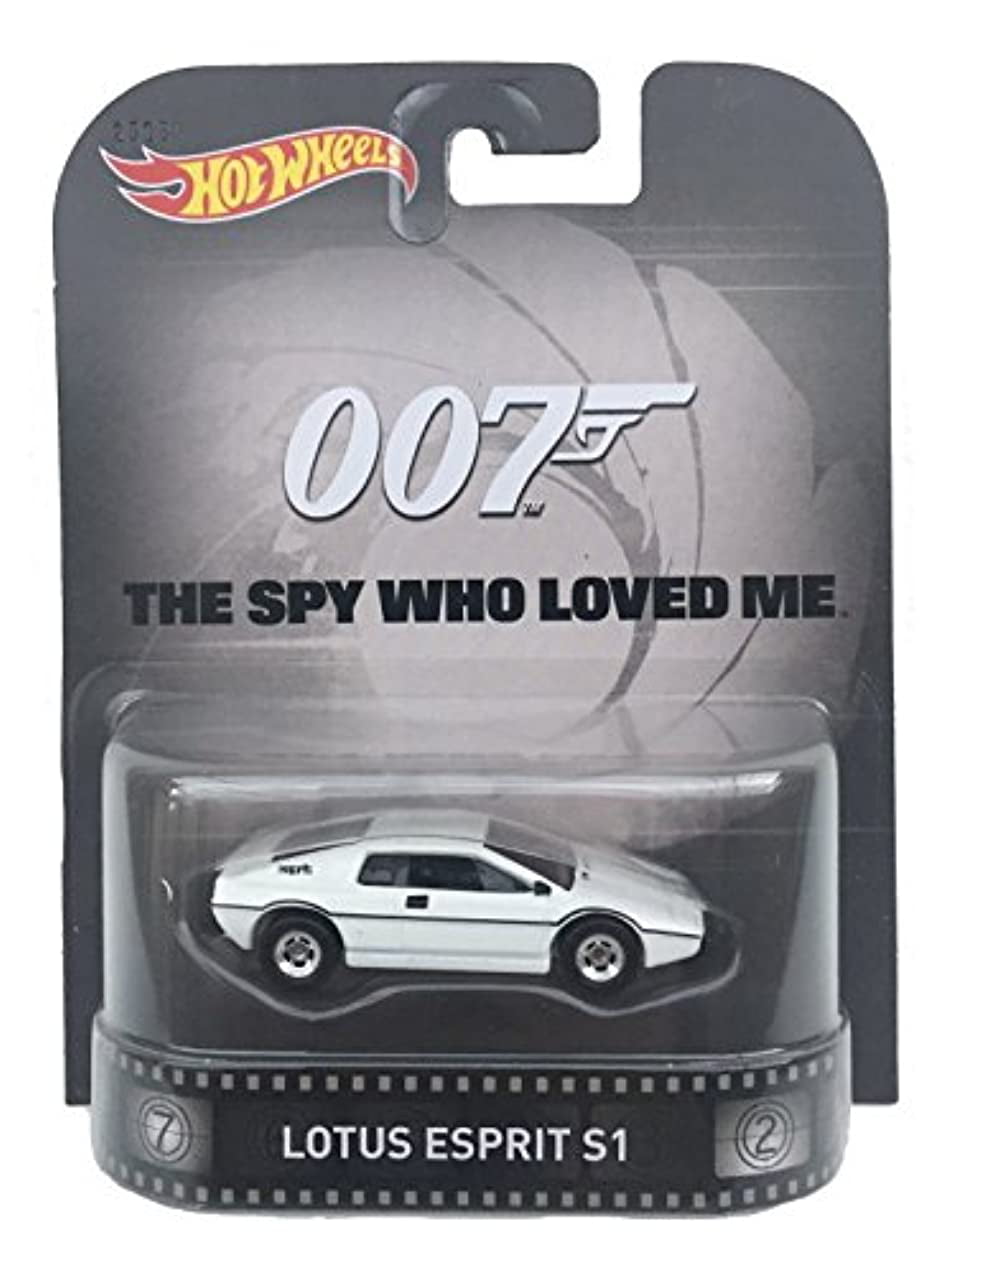 Lotus Esprit S1 James Bond 007 The Spy Who Loved Me Hot Wheels 2014 Retro Series 1/64 Die Cast Vehicle